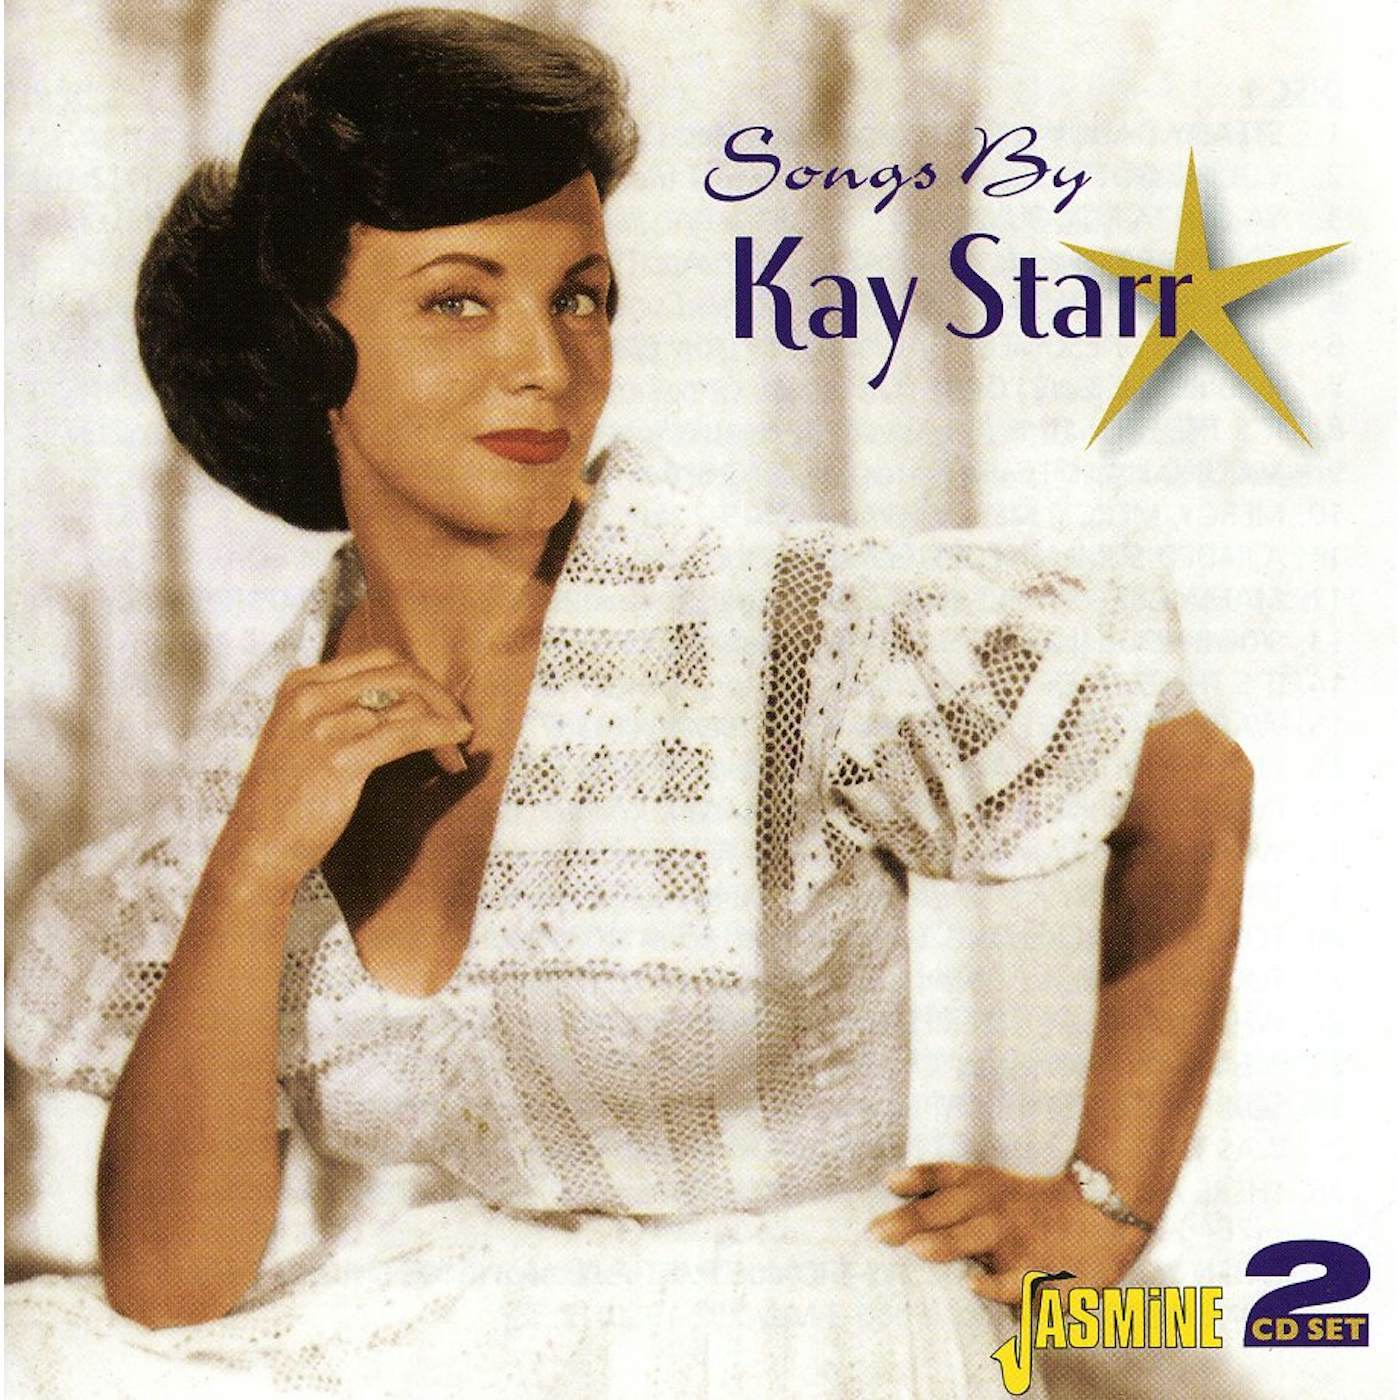 Kay Starr SONGS BY CD